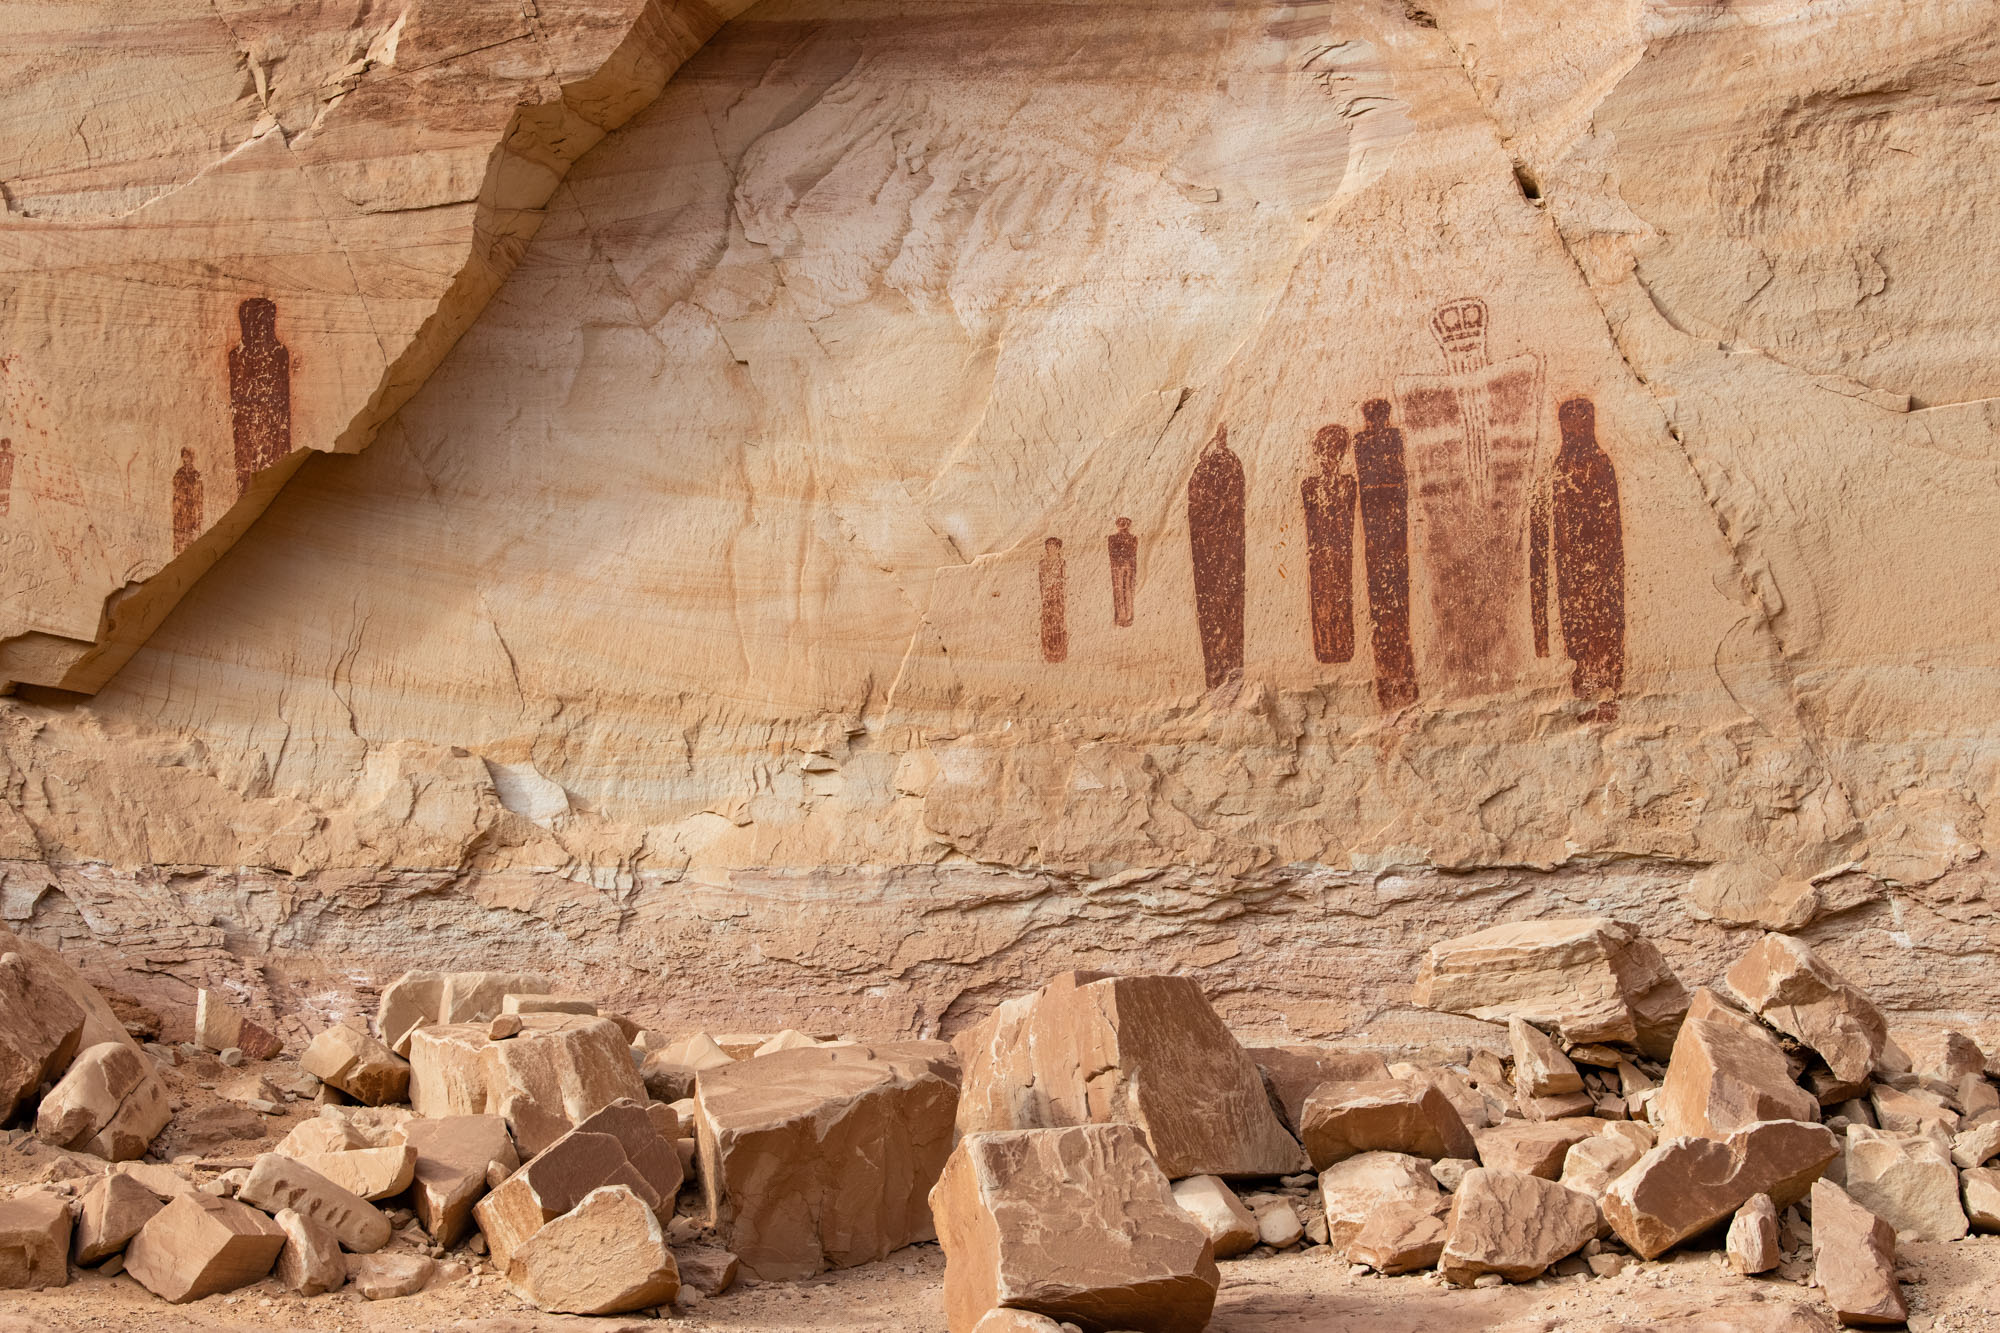 horseshoe canyon, utah, pictographs, petroglyphs, native american, barrier style art, rock art, native american art